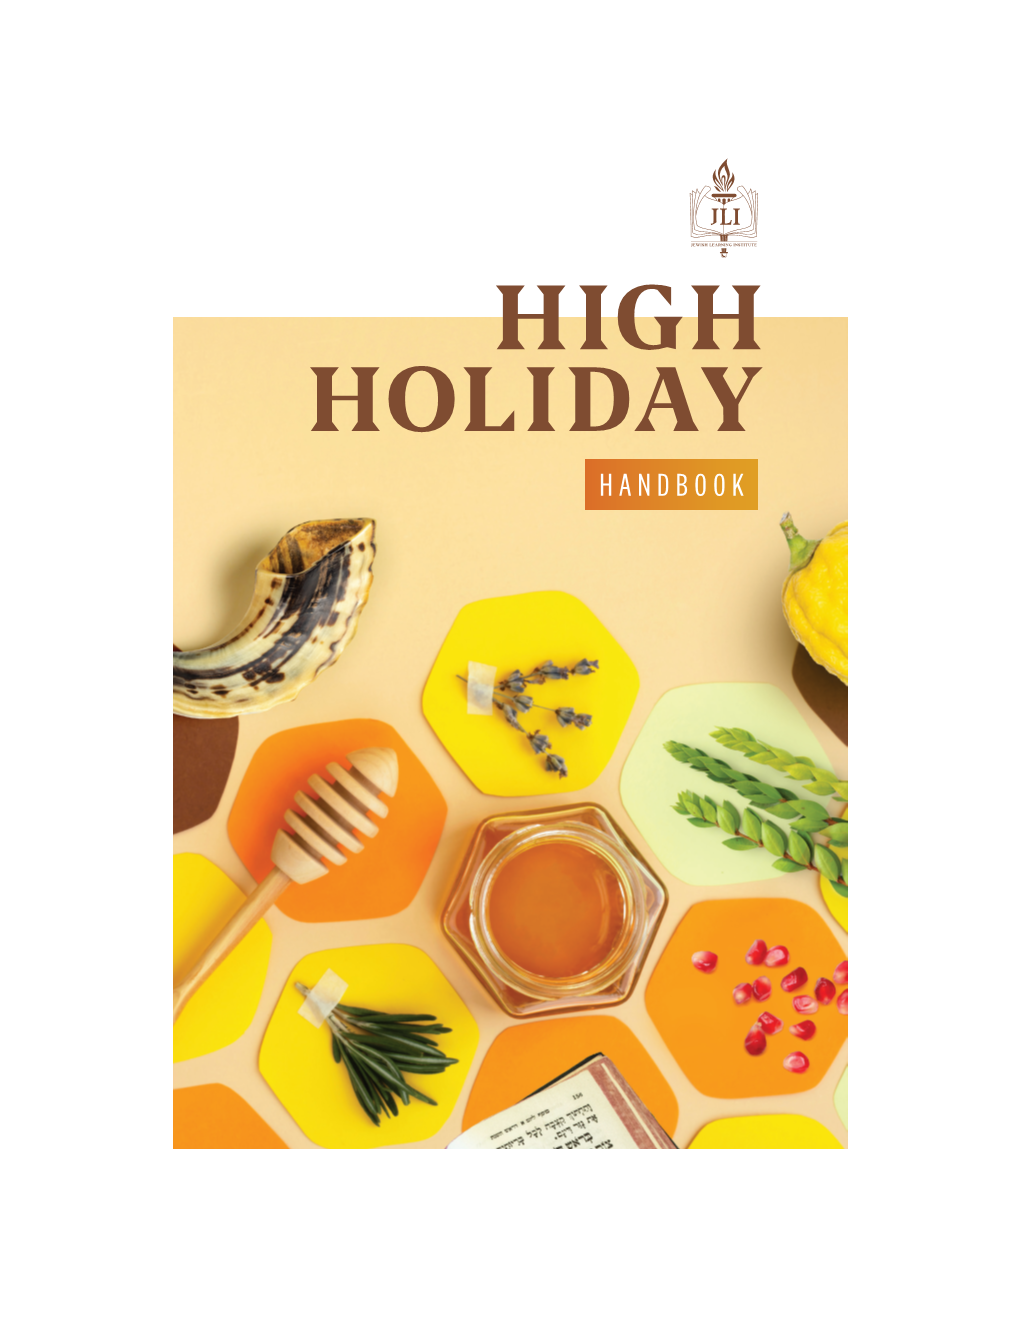 High Holiday Handbook